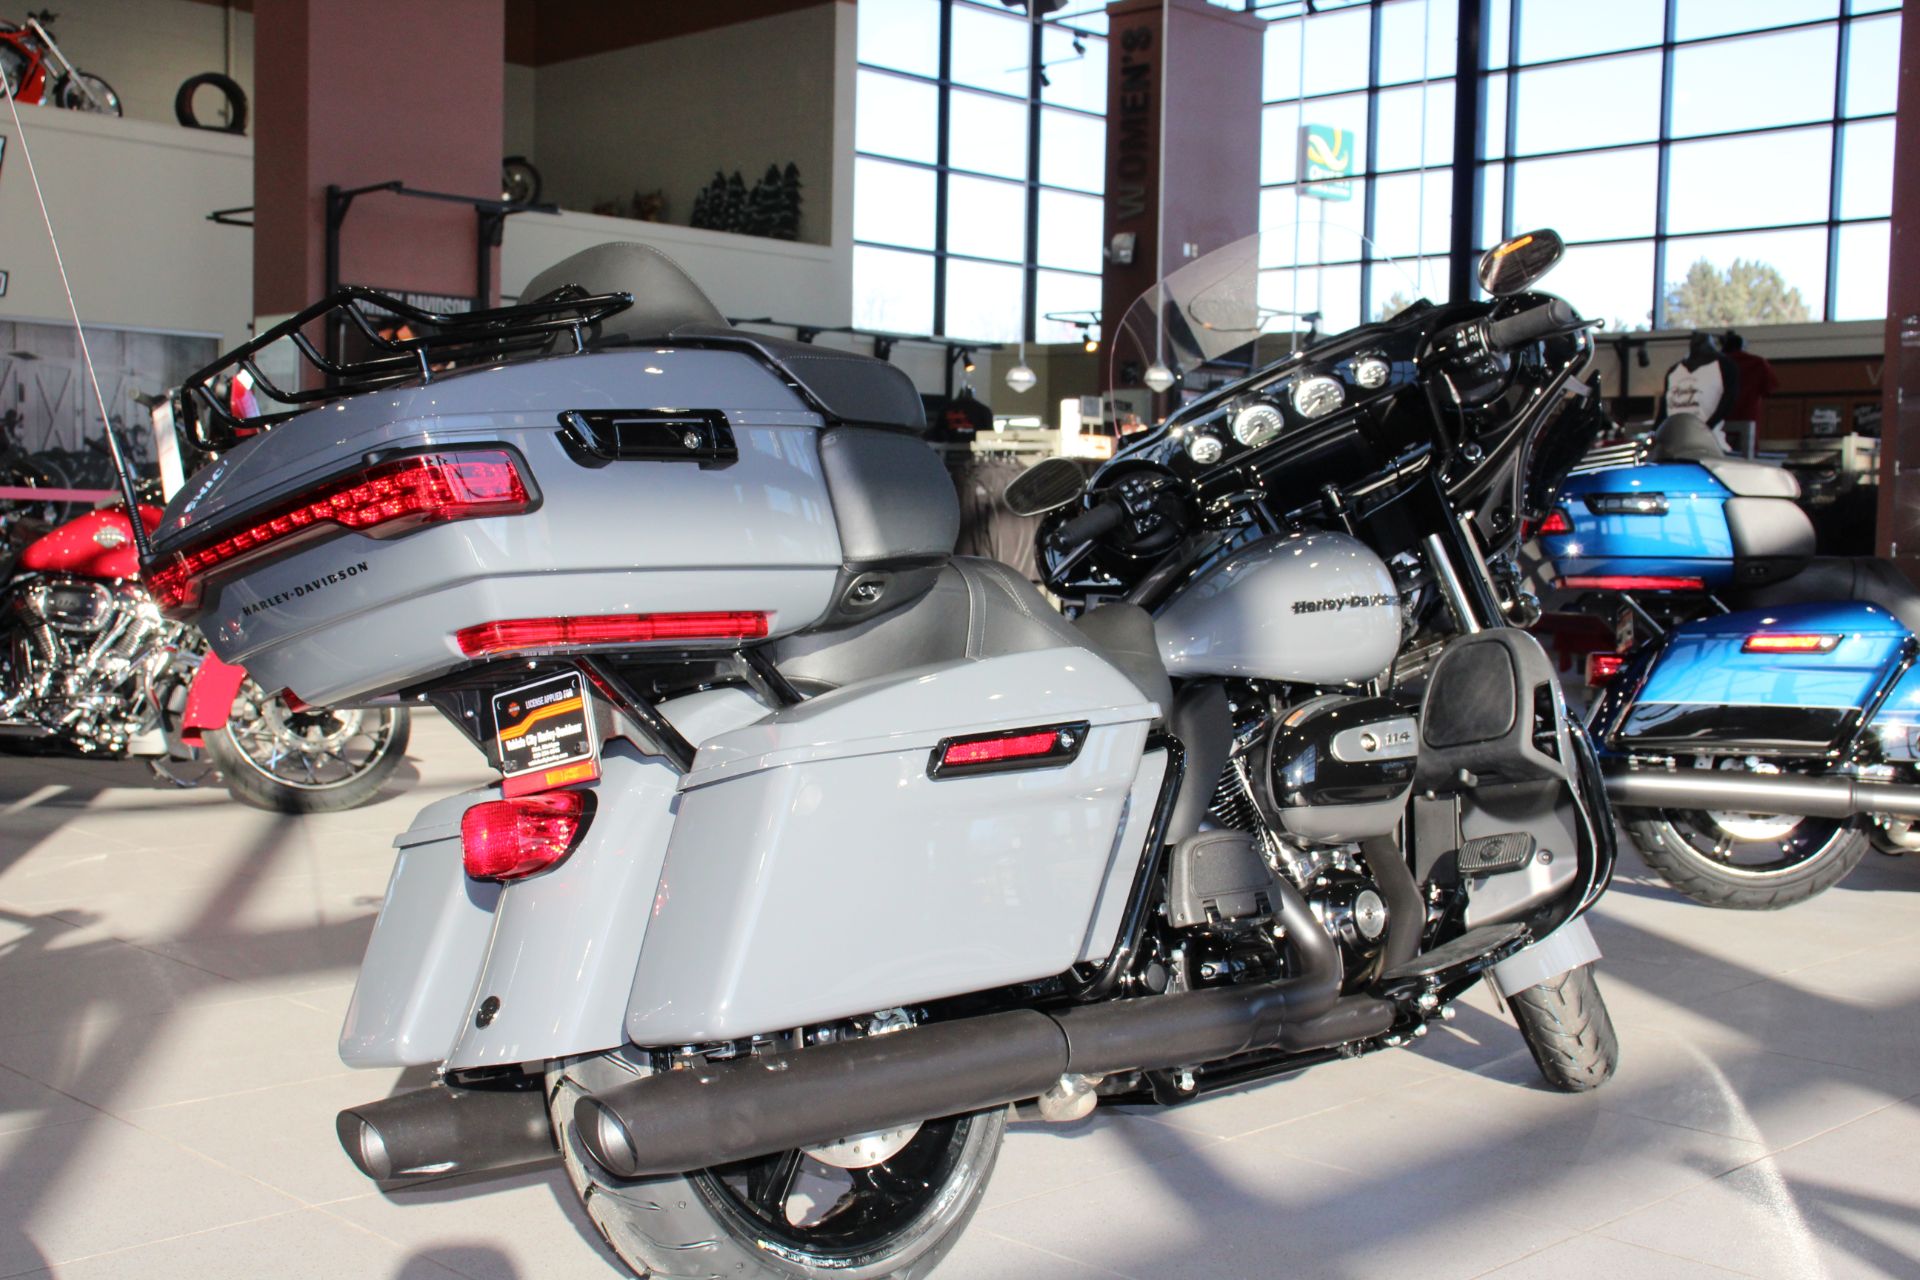 2022 Harley-Davidson Ultra Limited in Flint, Michigan - Photo 9